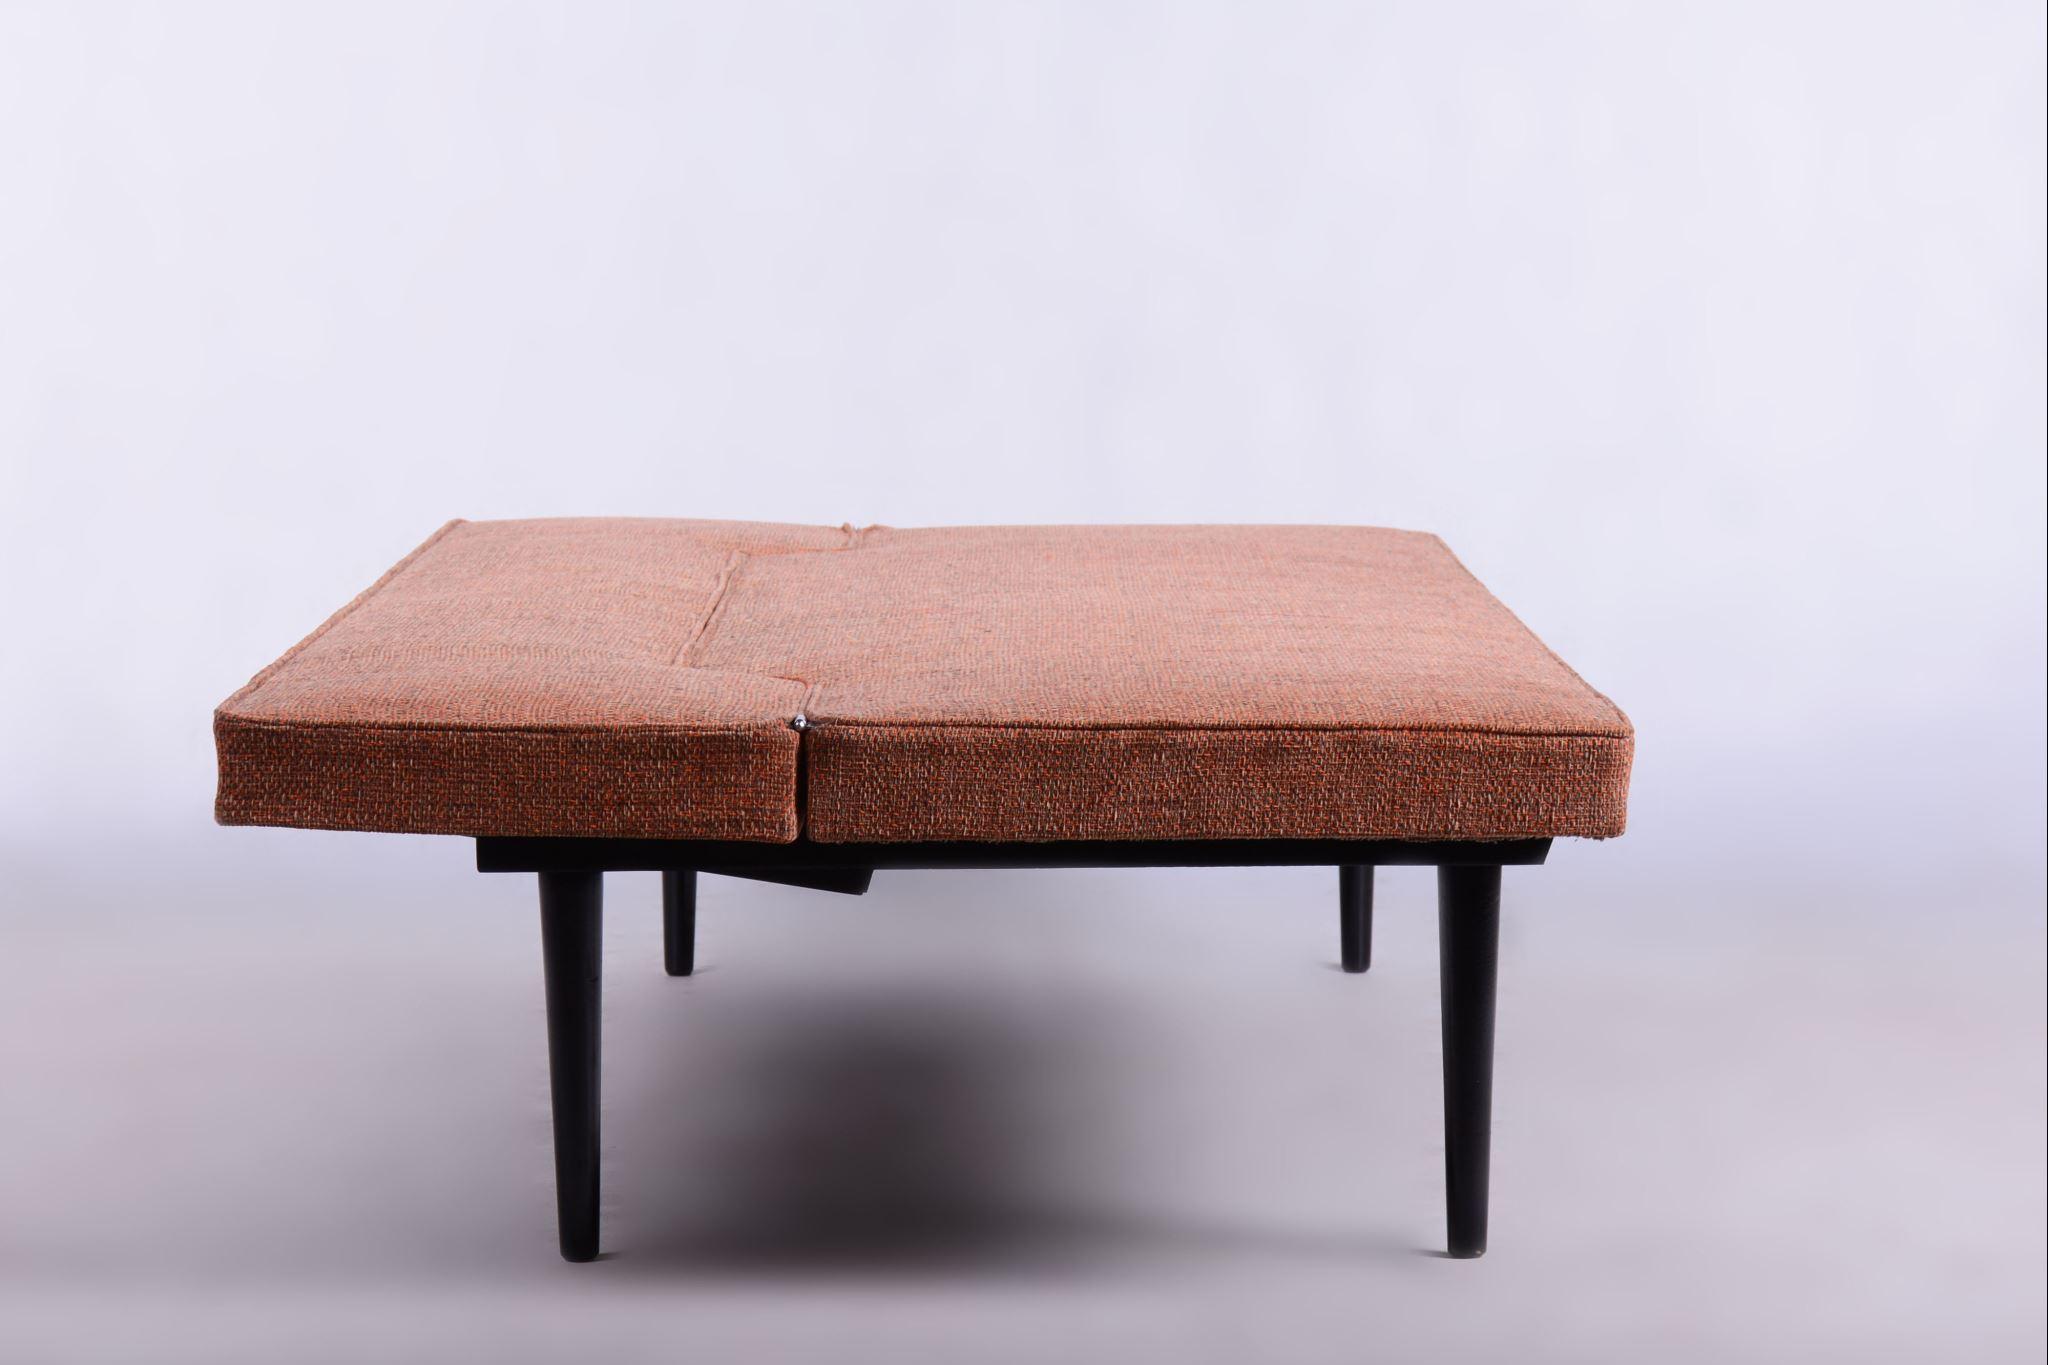 20th Century Restored Midcentury Sofa, Miroslav Navratil, Lacquered Wood, Czechia, 1960s For Sale